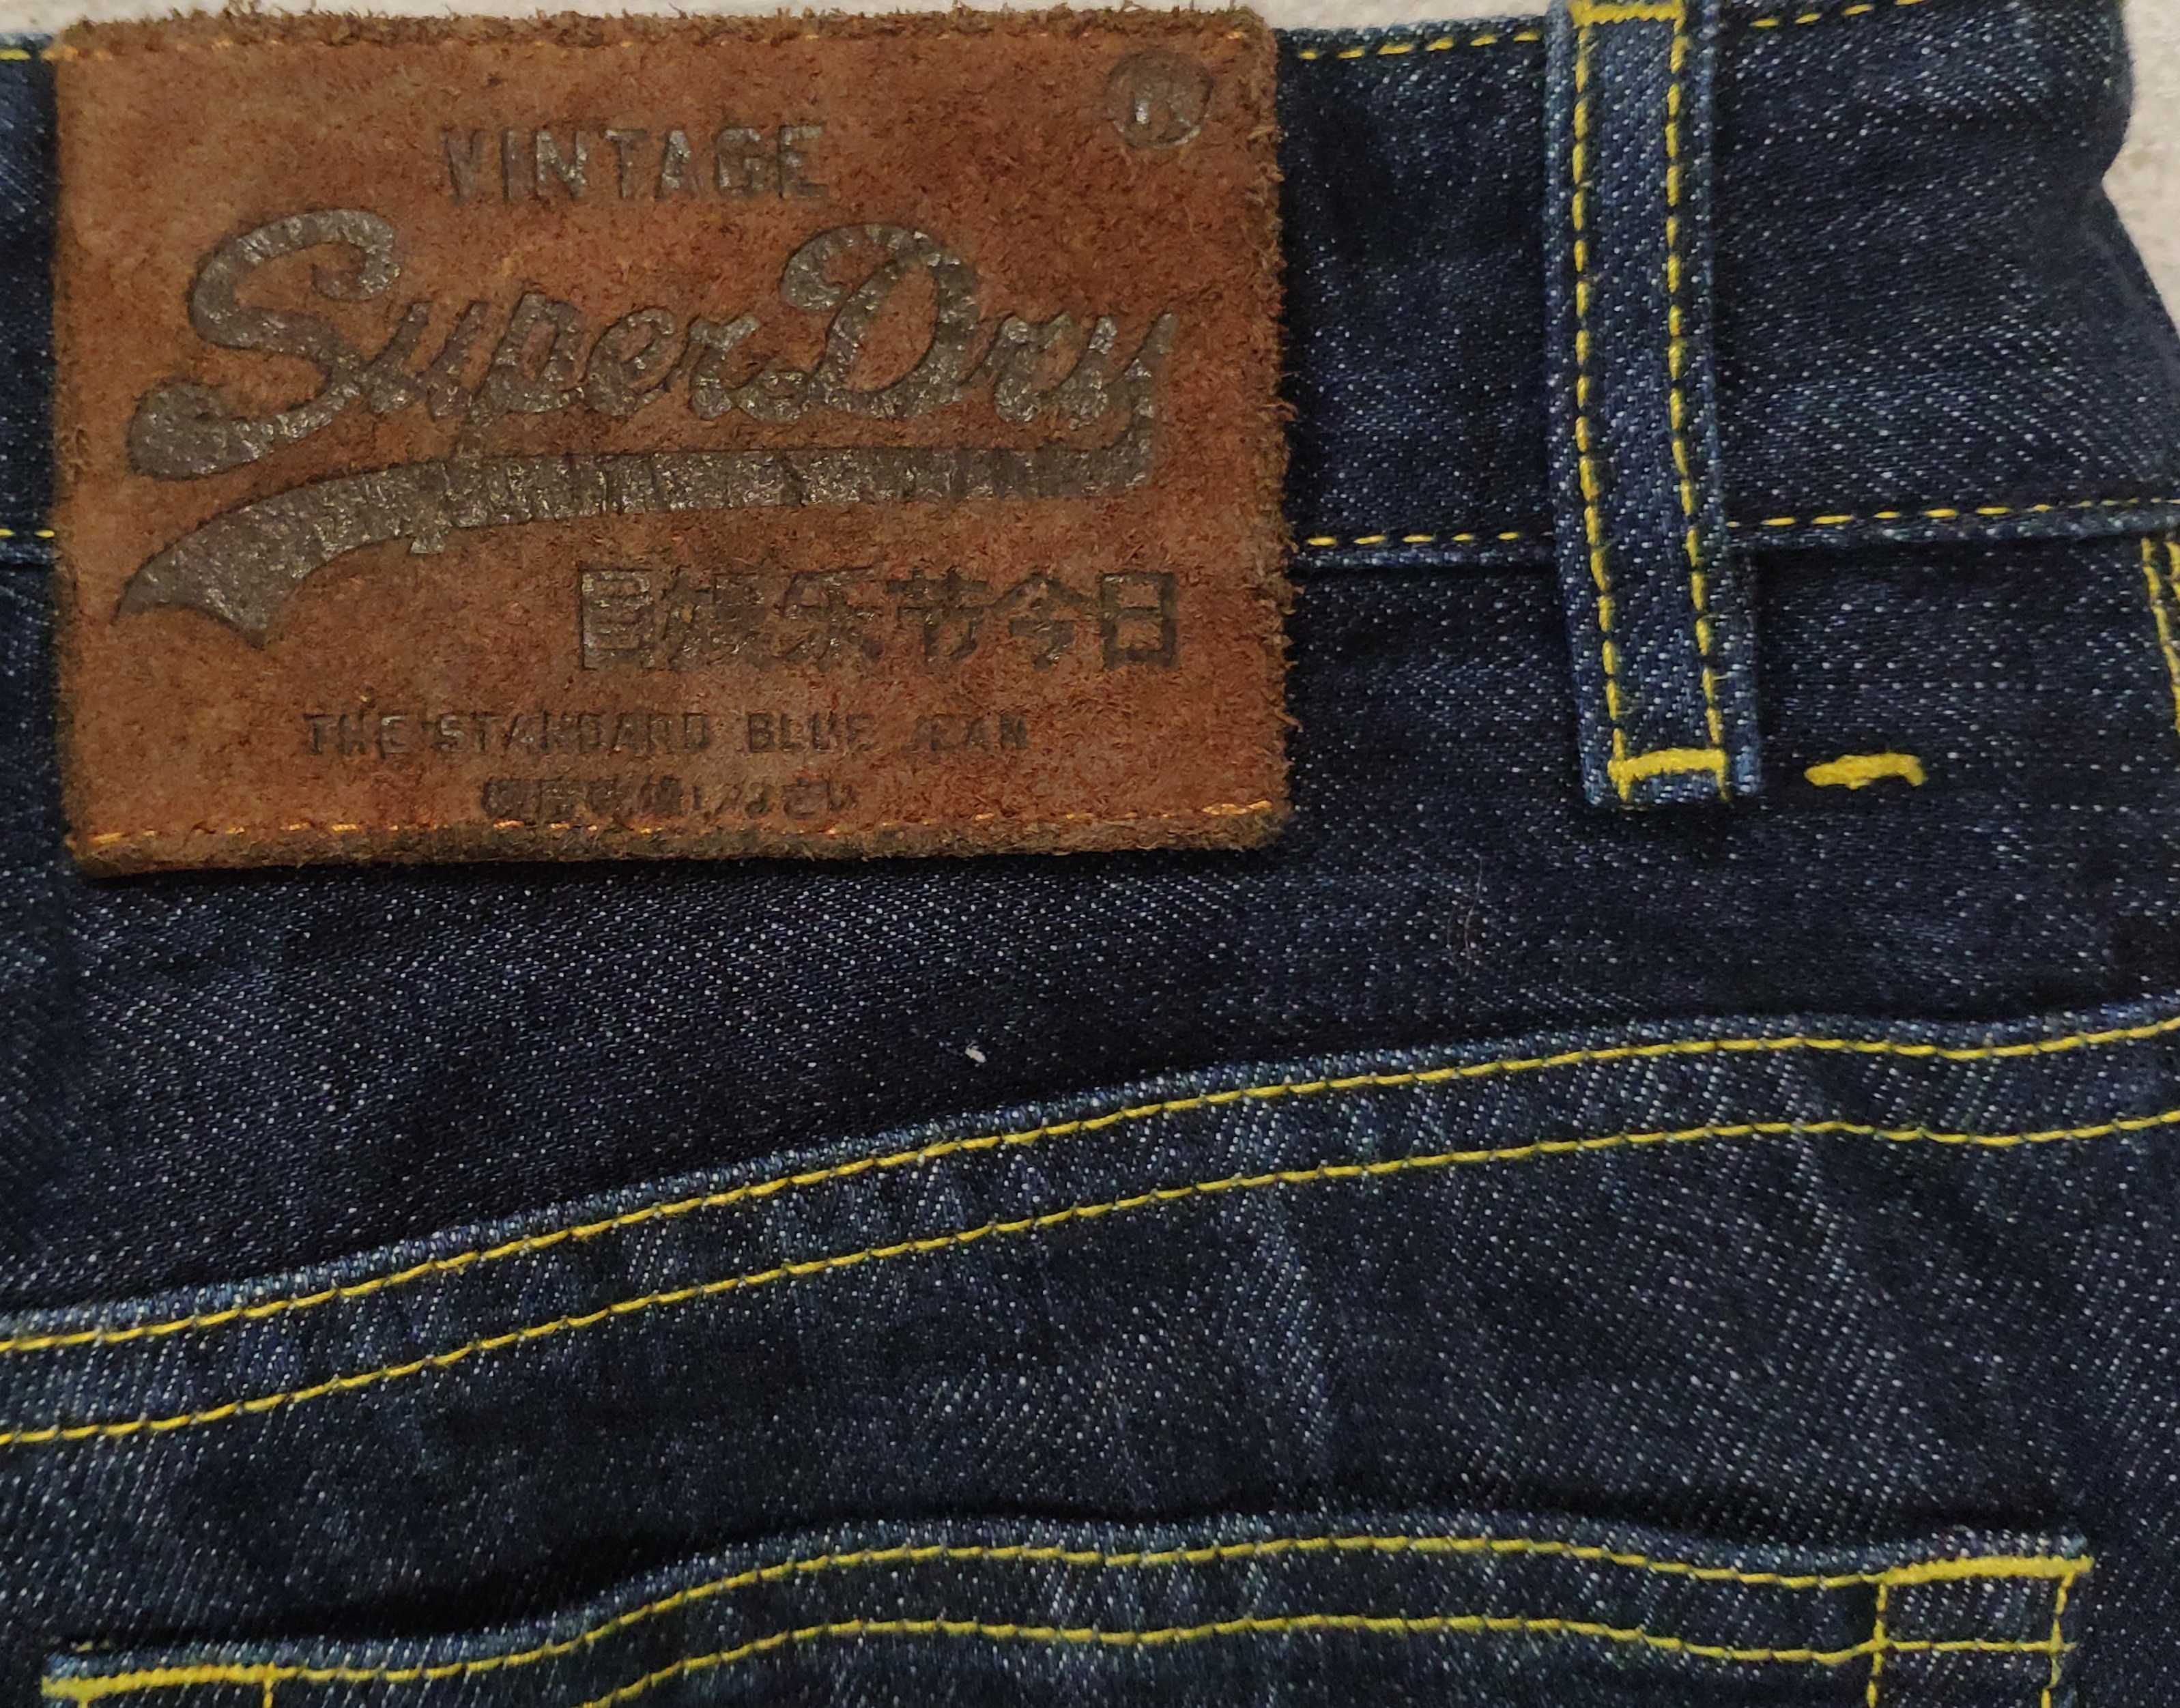 spodnie # SUPERDRY The Standard Blue Jean jak NOWE W32 L32 # pas 87 cm